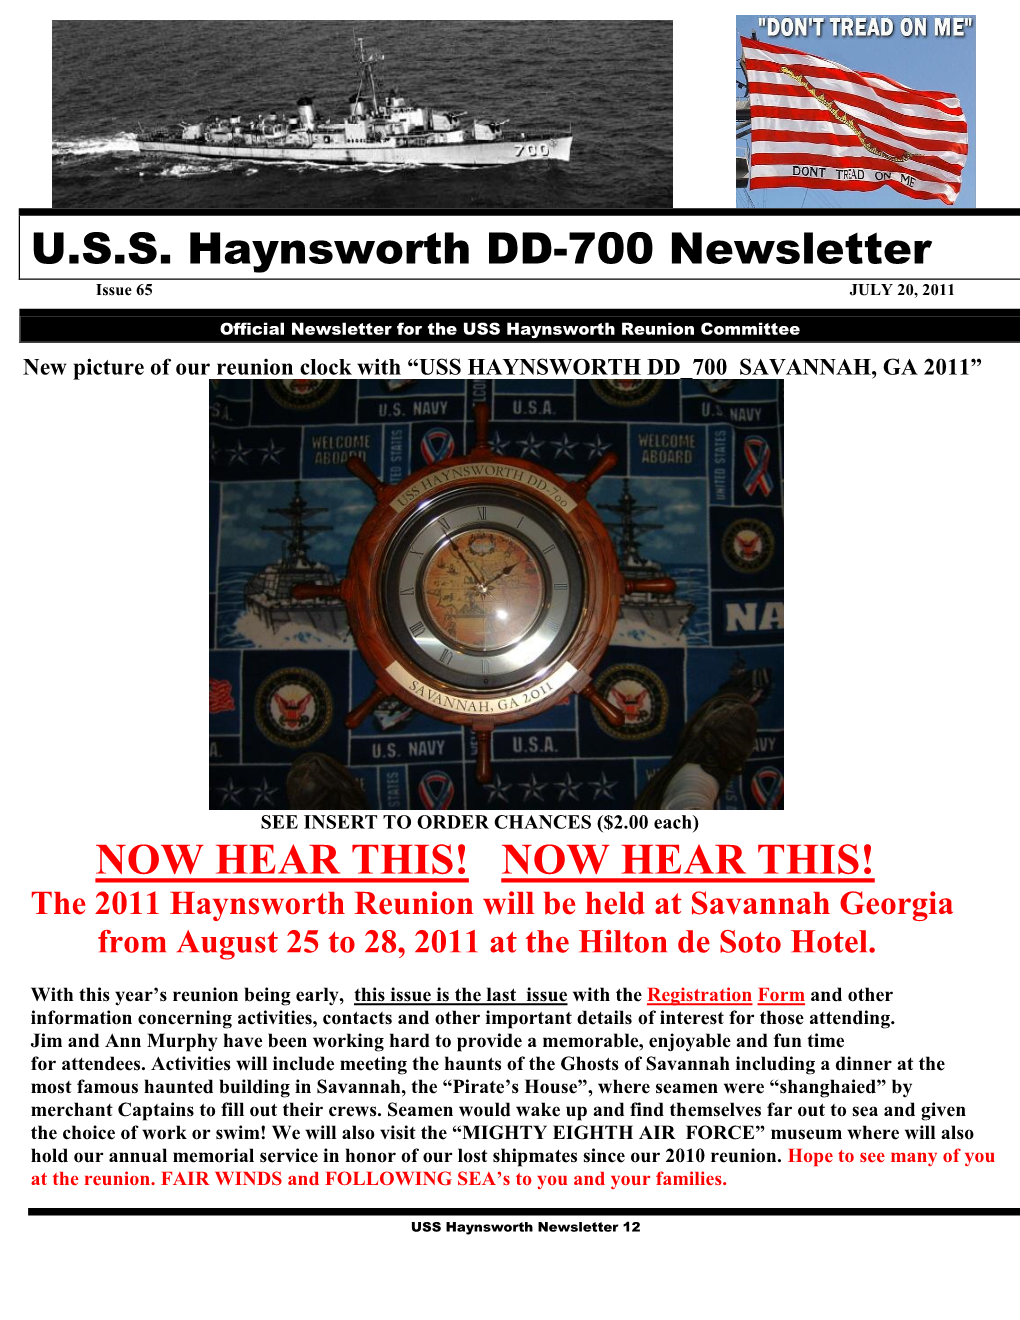 U.S.S. Haynsworth DD-700 Newsletter NOW HEAR THIS! NOW HEAR THIS!